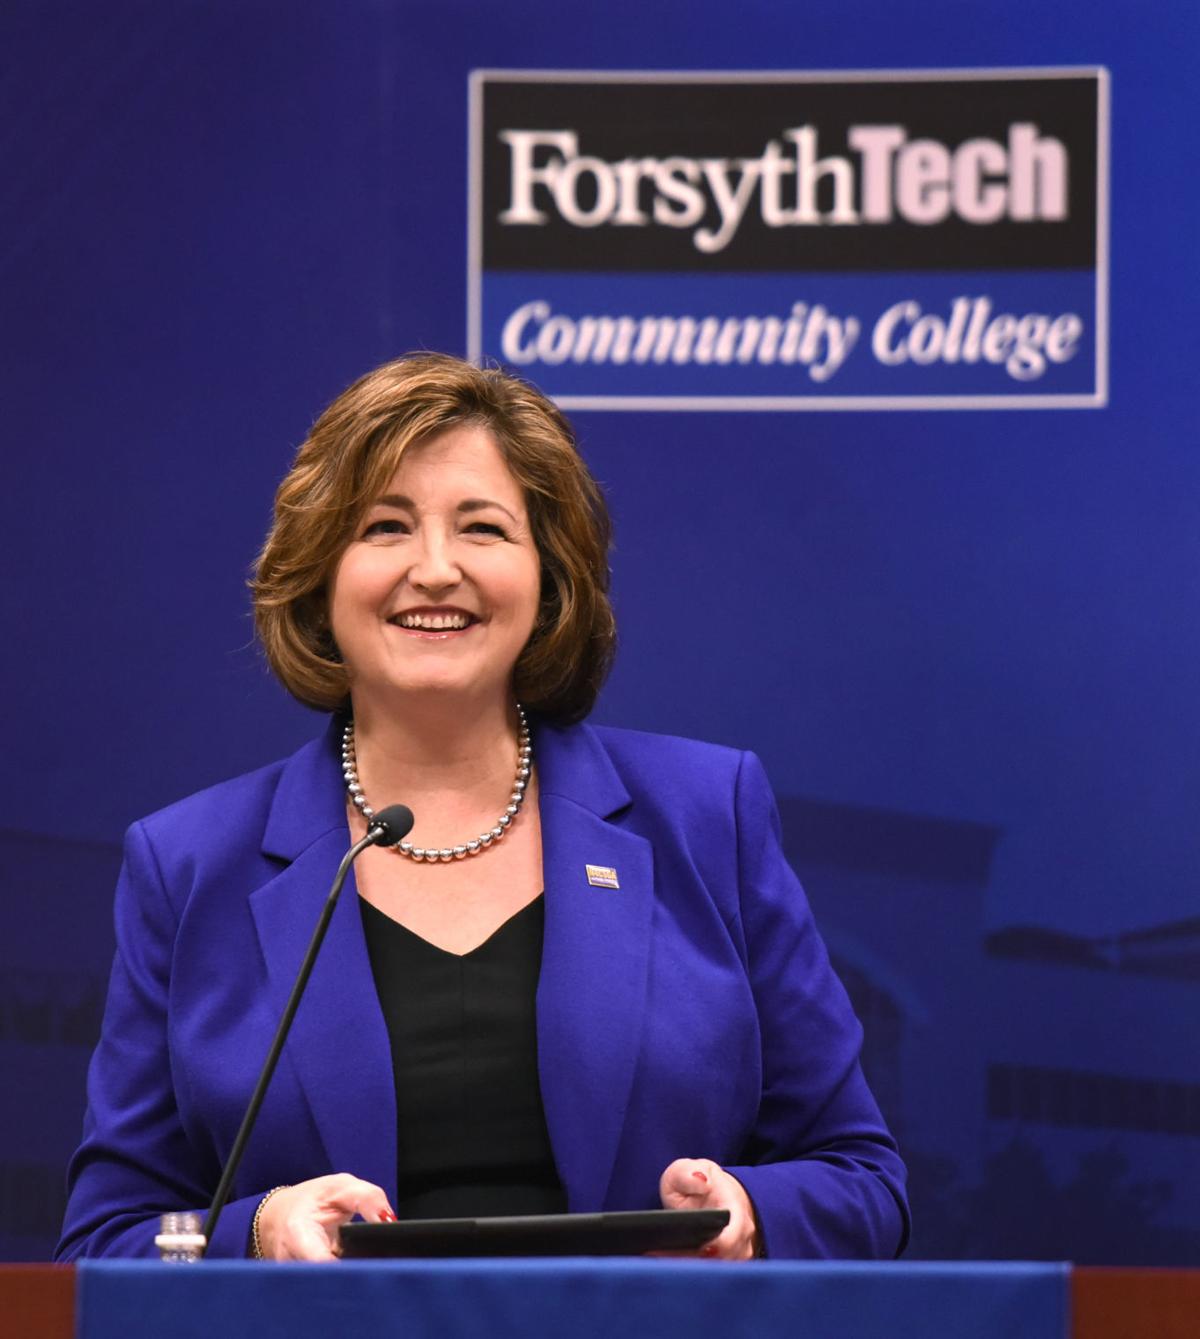 Forsyth Tech Calendar 2022 Who's Forsyth Tech's New President? Janet Spriggs Of Rowan-Cabarrus  Community College | Local News | Journalnow.com